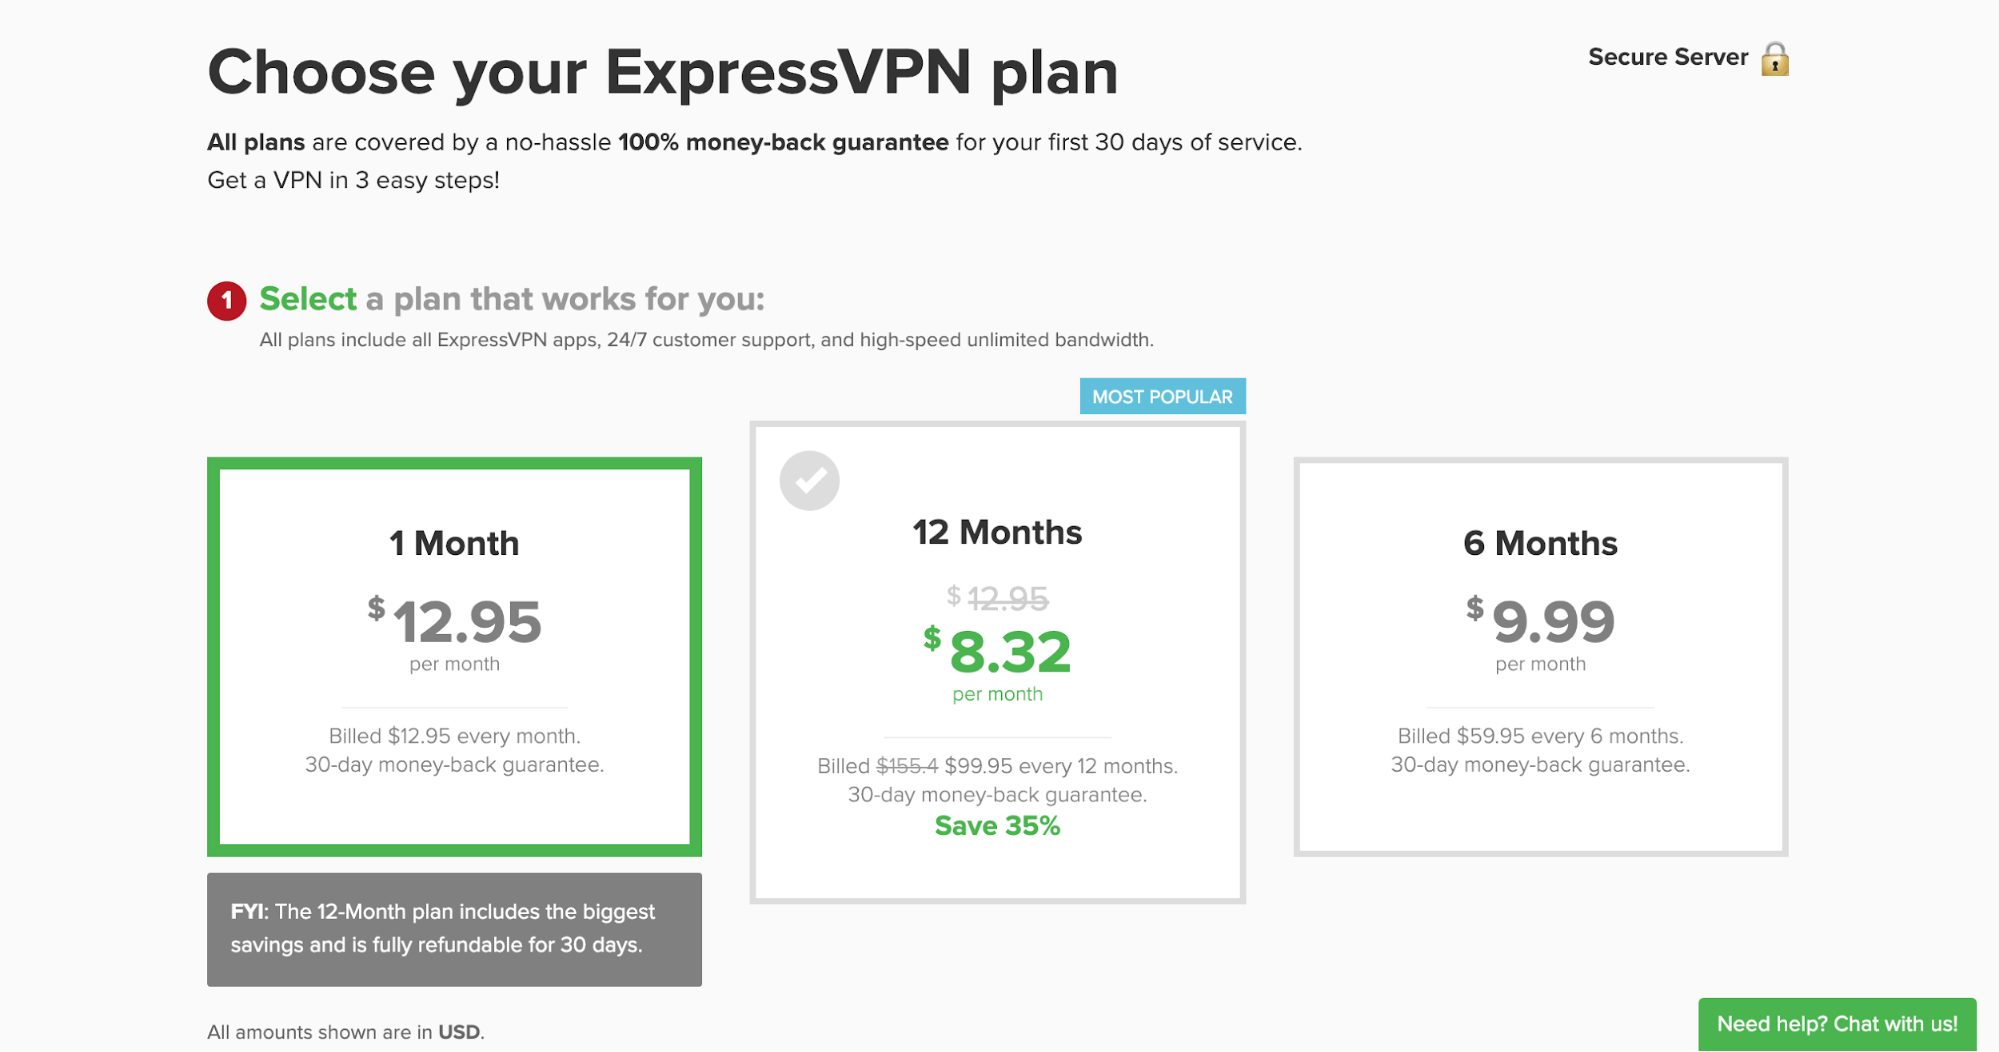 ExpressVPN Payment Plans